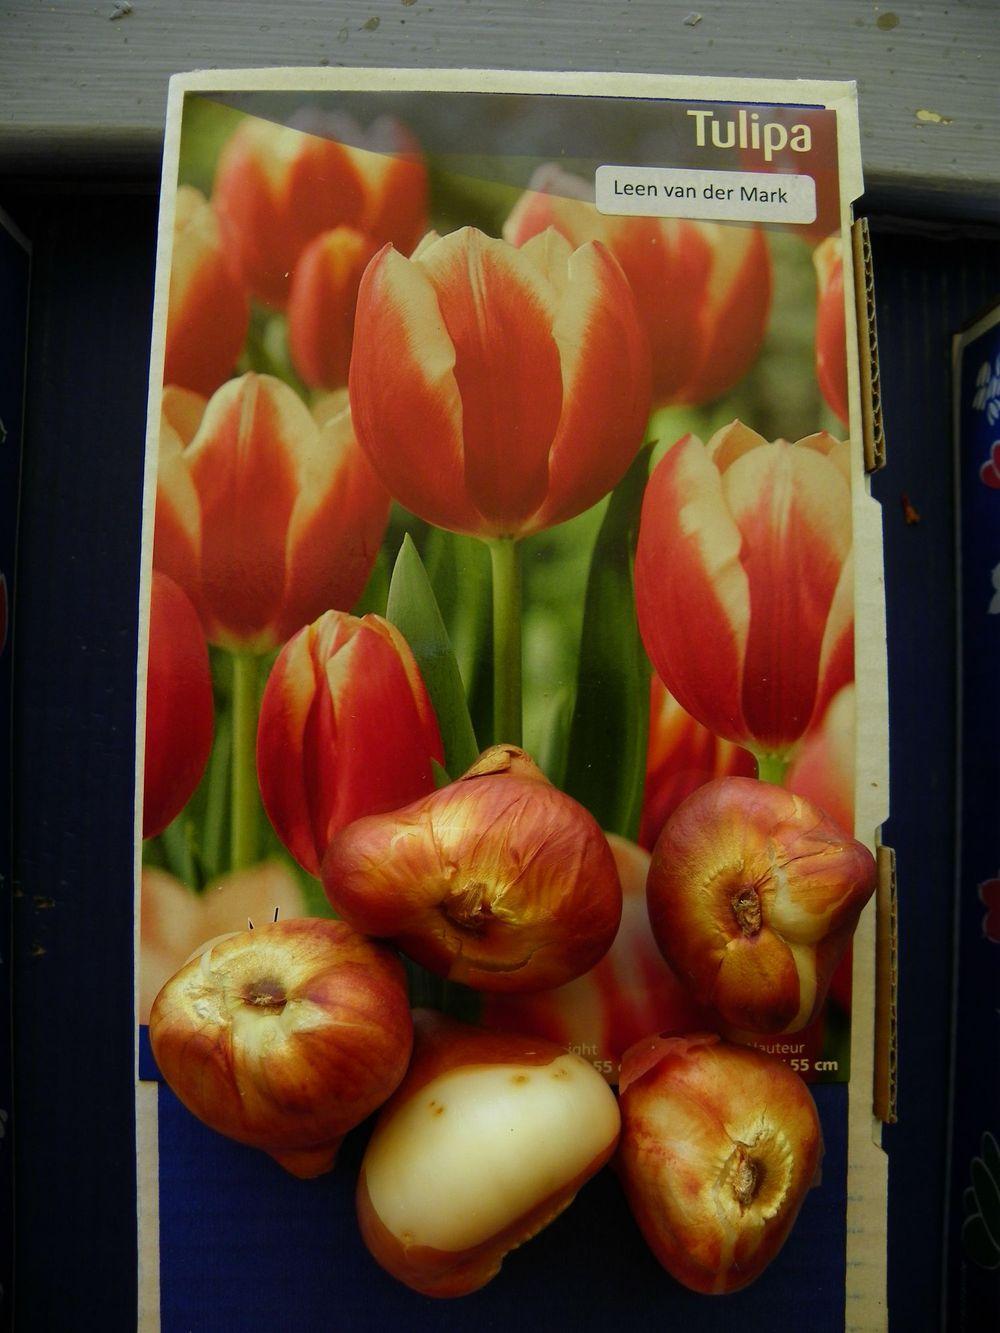 Photo of Triumph Tulip (Tulipa 'Leen van der Mark') uploaded by Newyorkrita